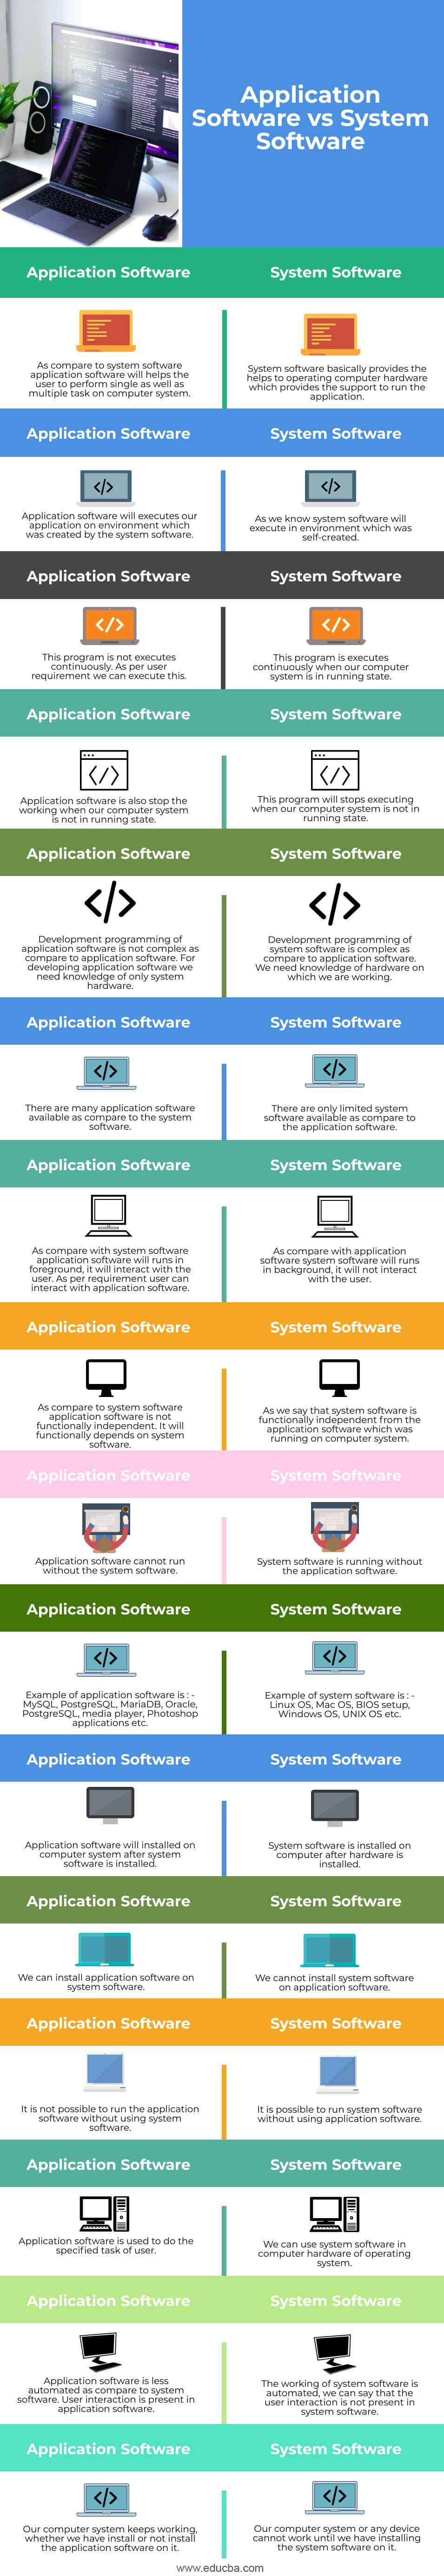 Application-Software-vs-System-Software-info